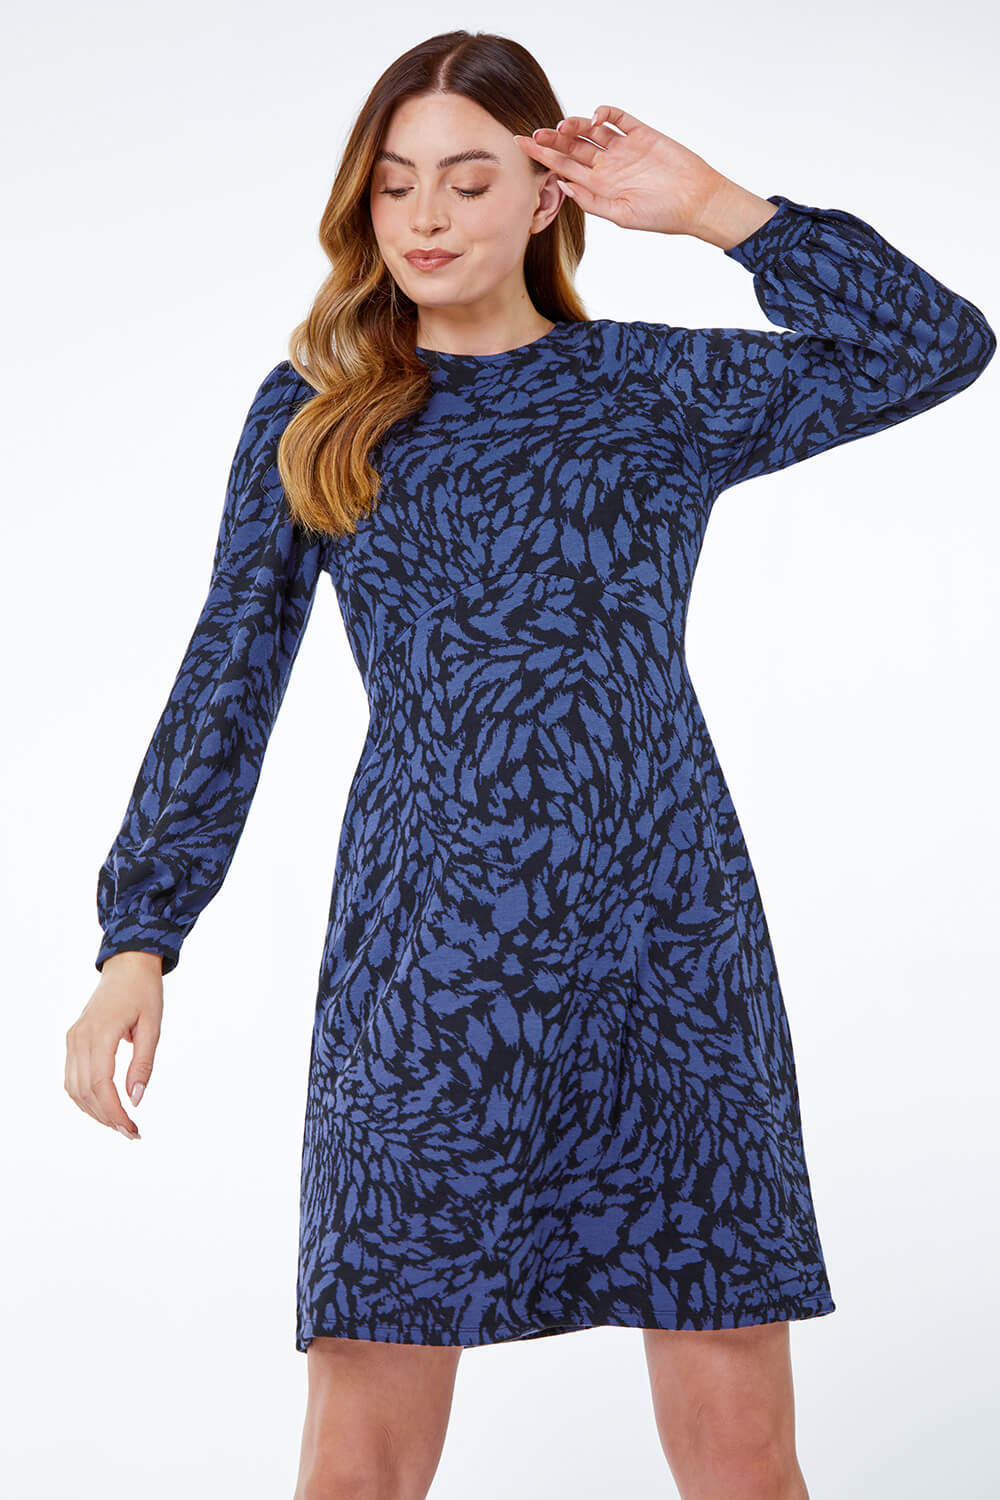 Midnight Blue Animal Print Jacquard Dress, Image 4 of 5